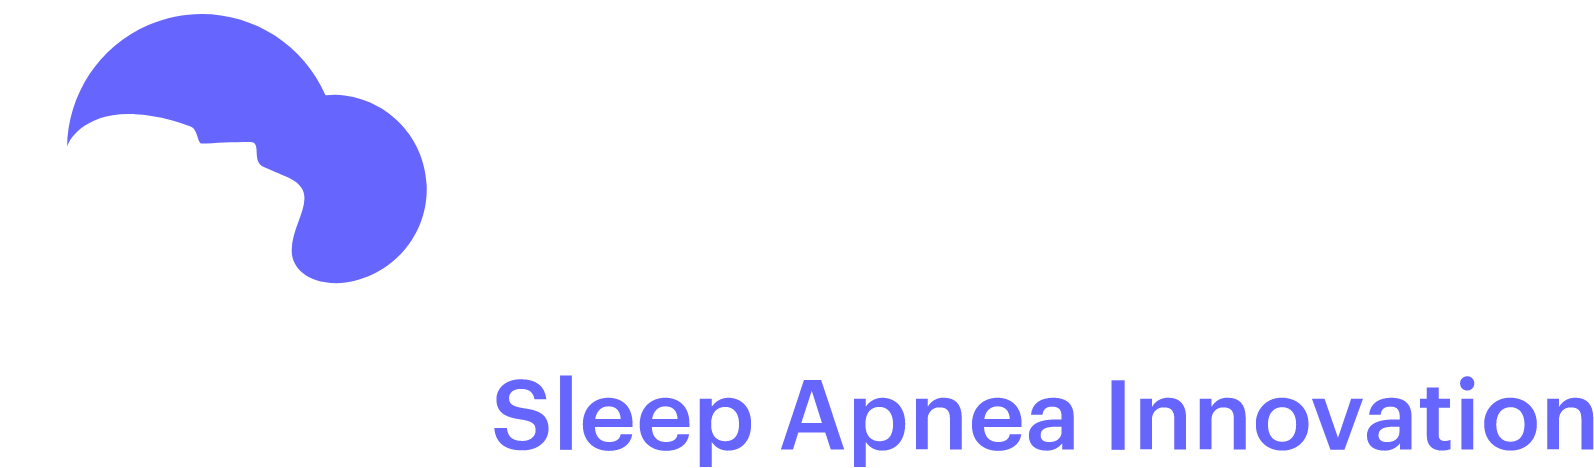 Inspire Medical Systems
 Logo groß für dunkle Hintergründe (transparentes PNG)